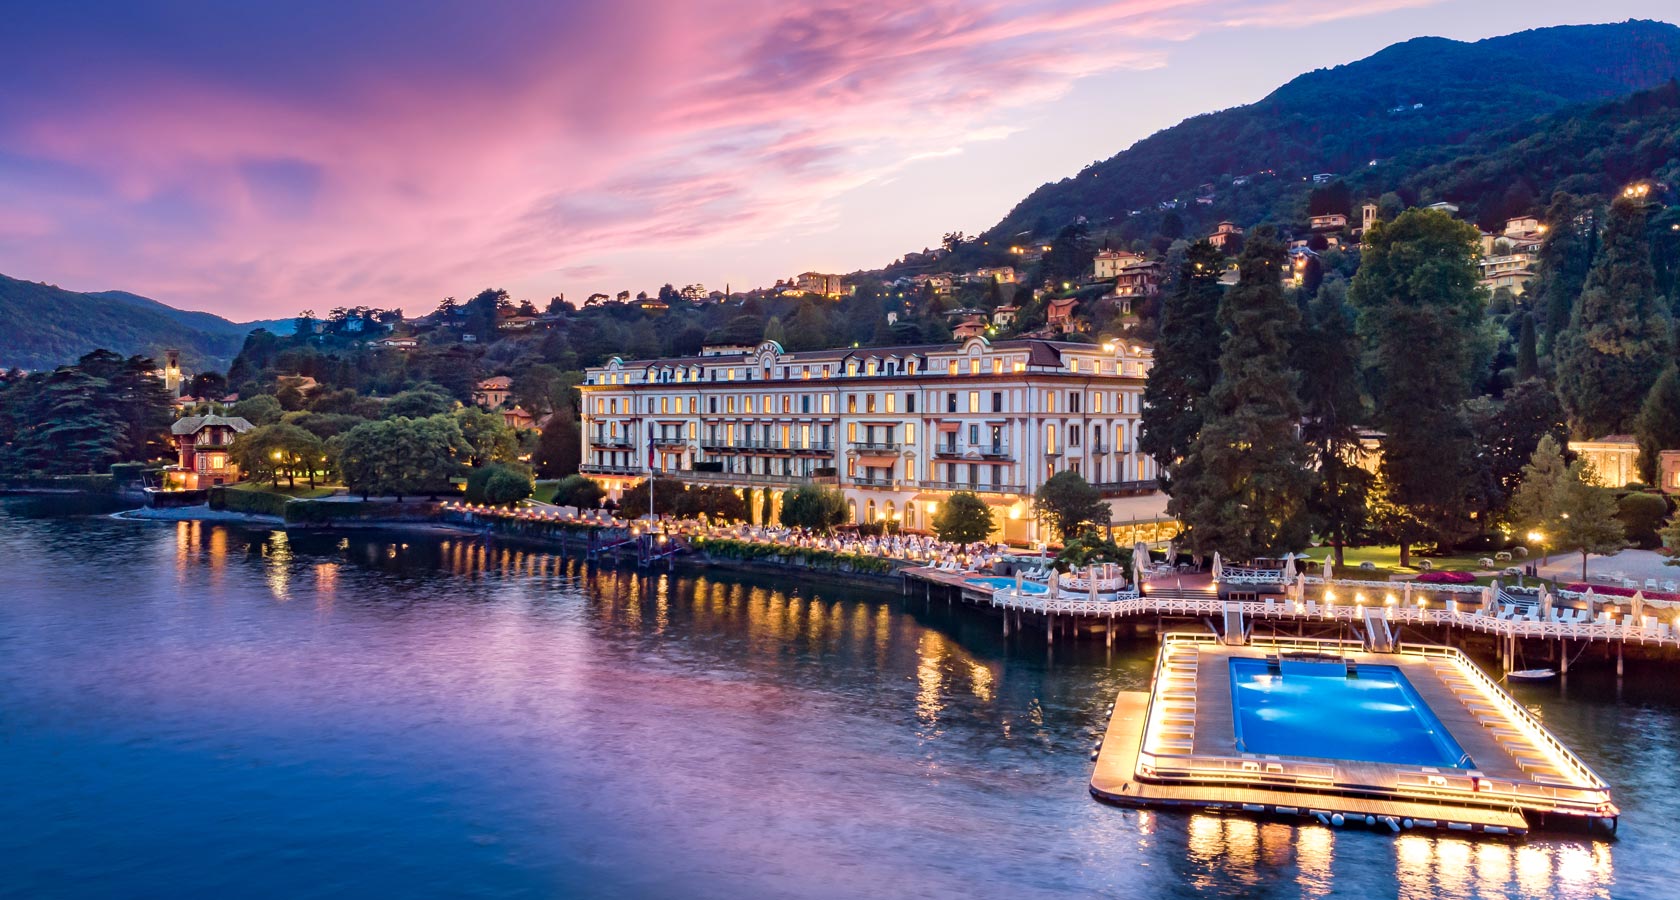 Relish in timeless elegance at Villa d’Este on Lake Como’s shores this summer